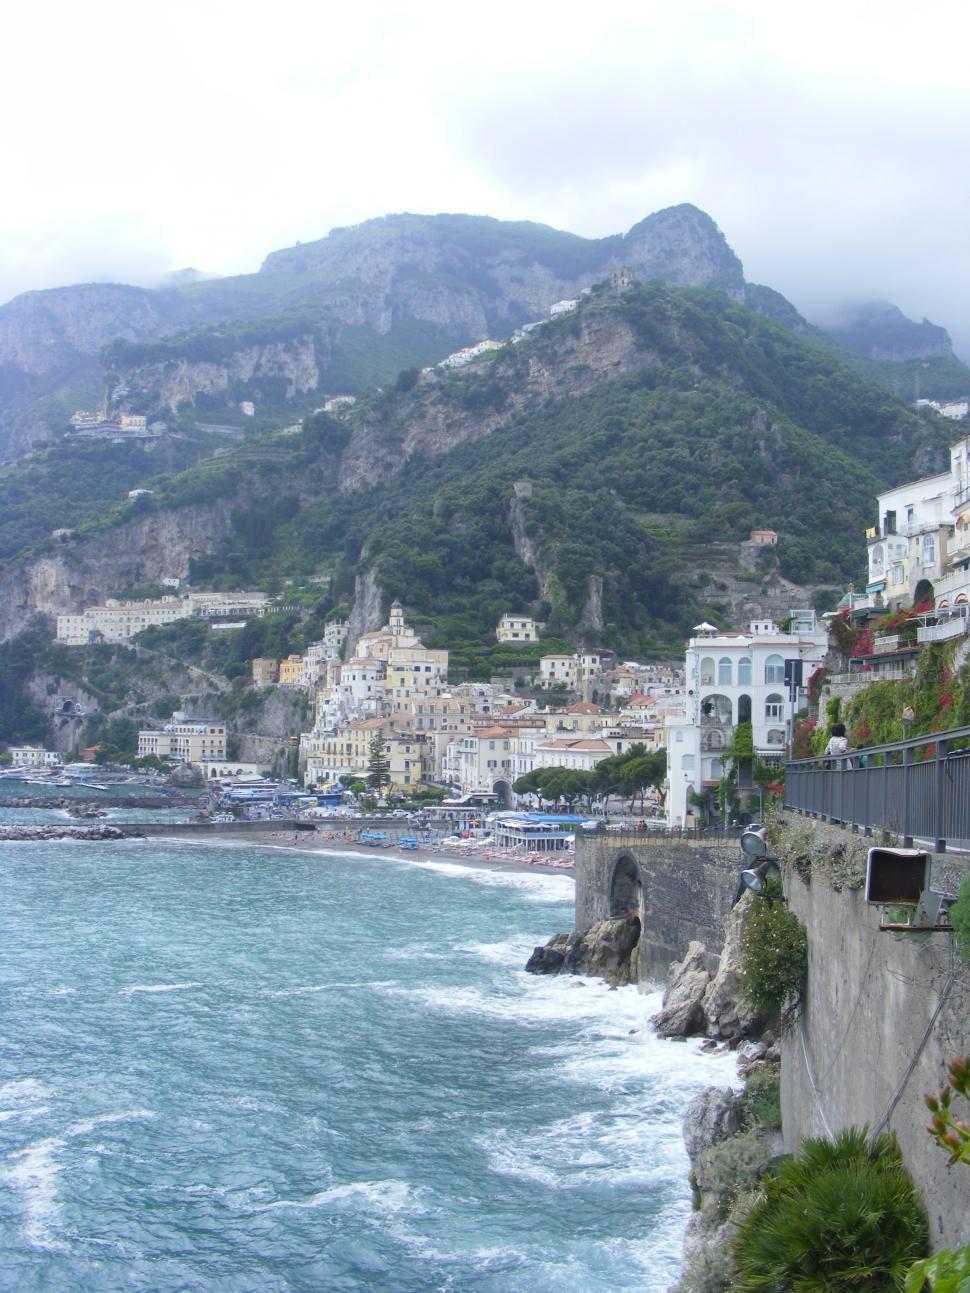 Free Image of Seaside hotels on the Amalfi coast from Italy  